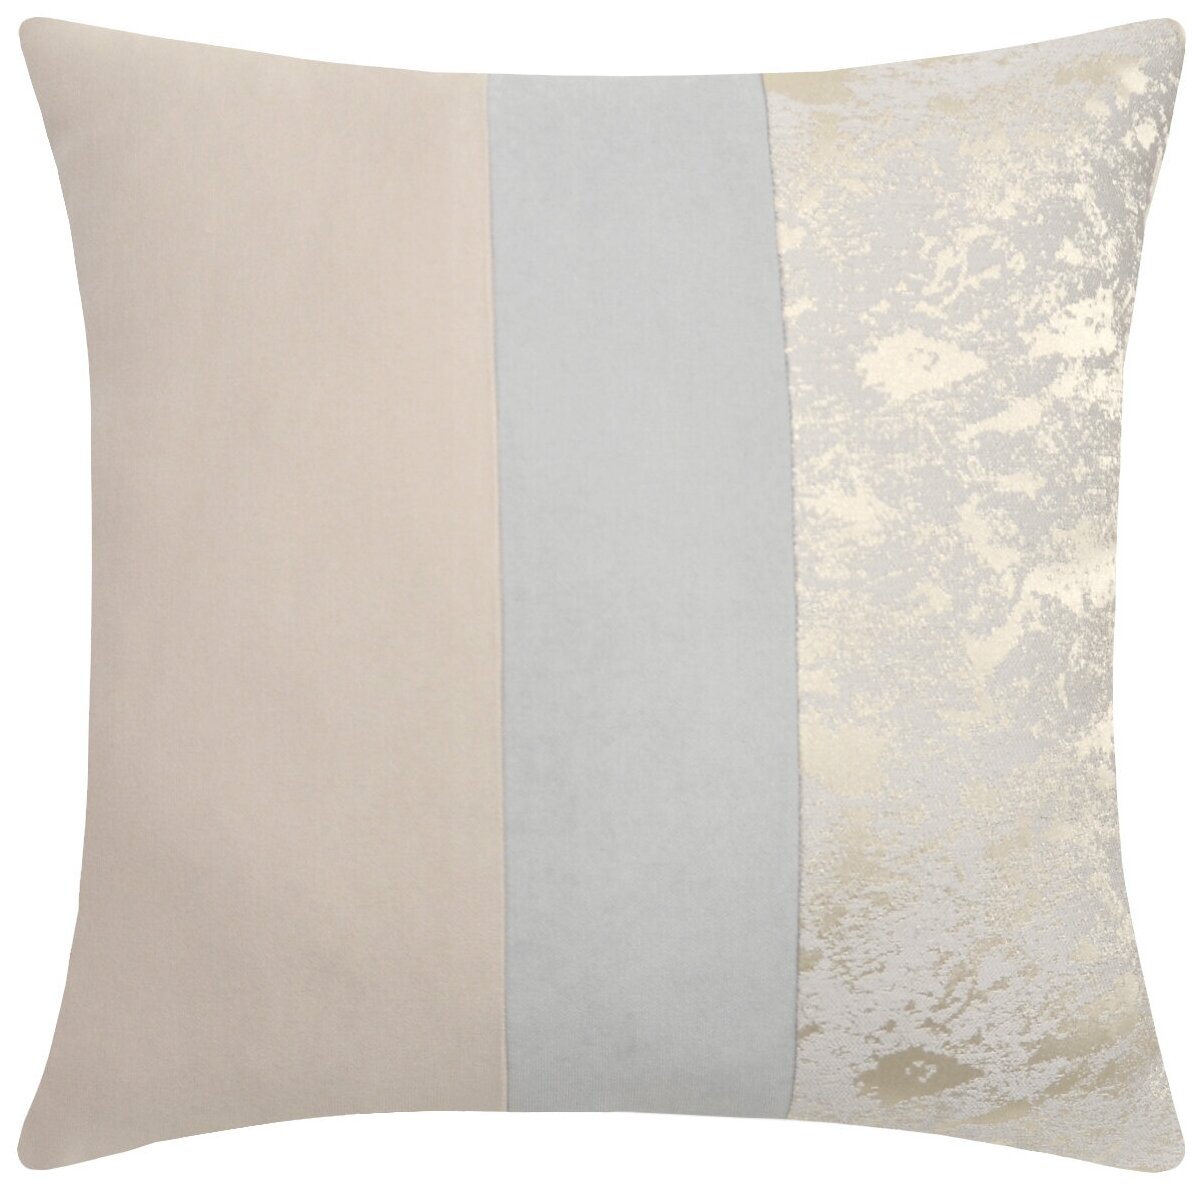 Наволочка - чехол для декоративной подушки на молнии Авелин, 45 х 45 см, бежевый, серый